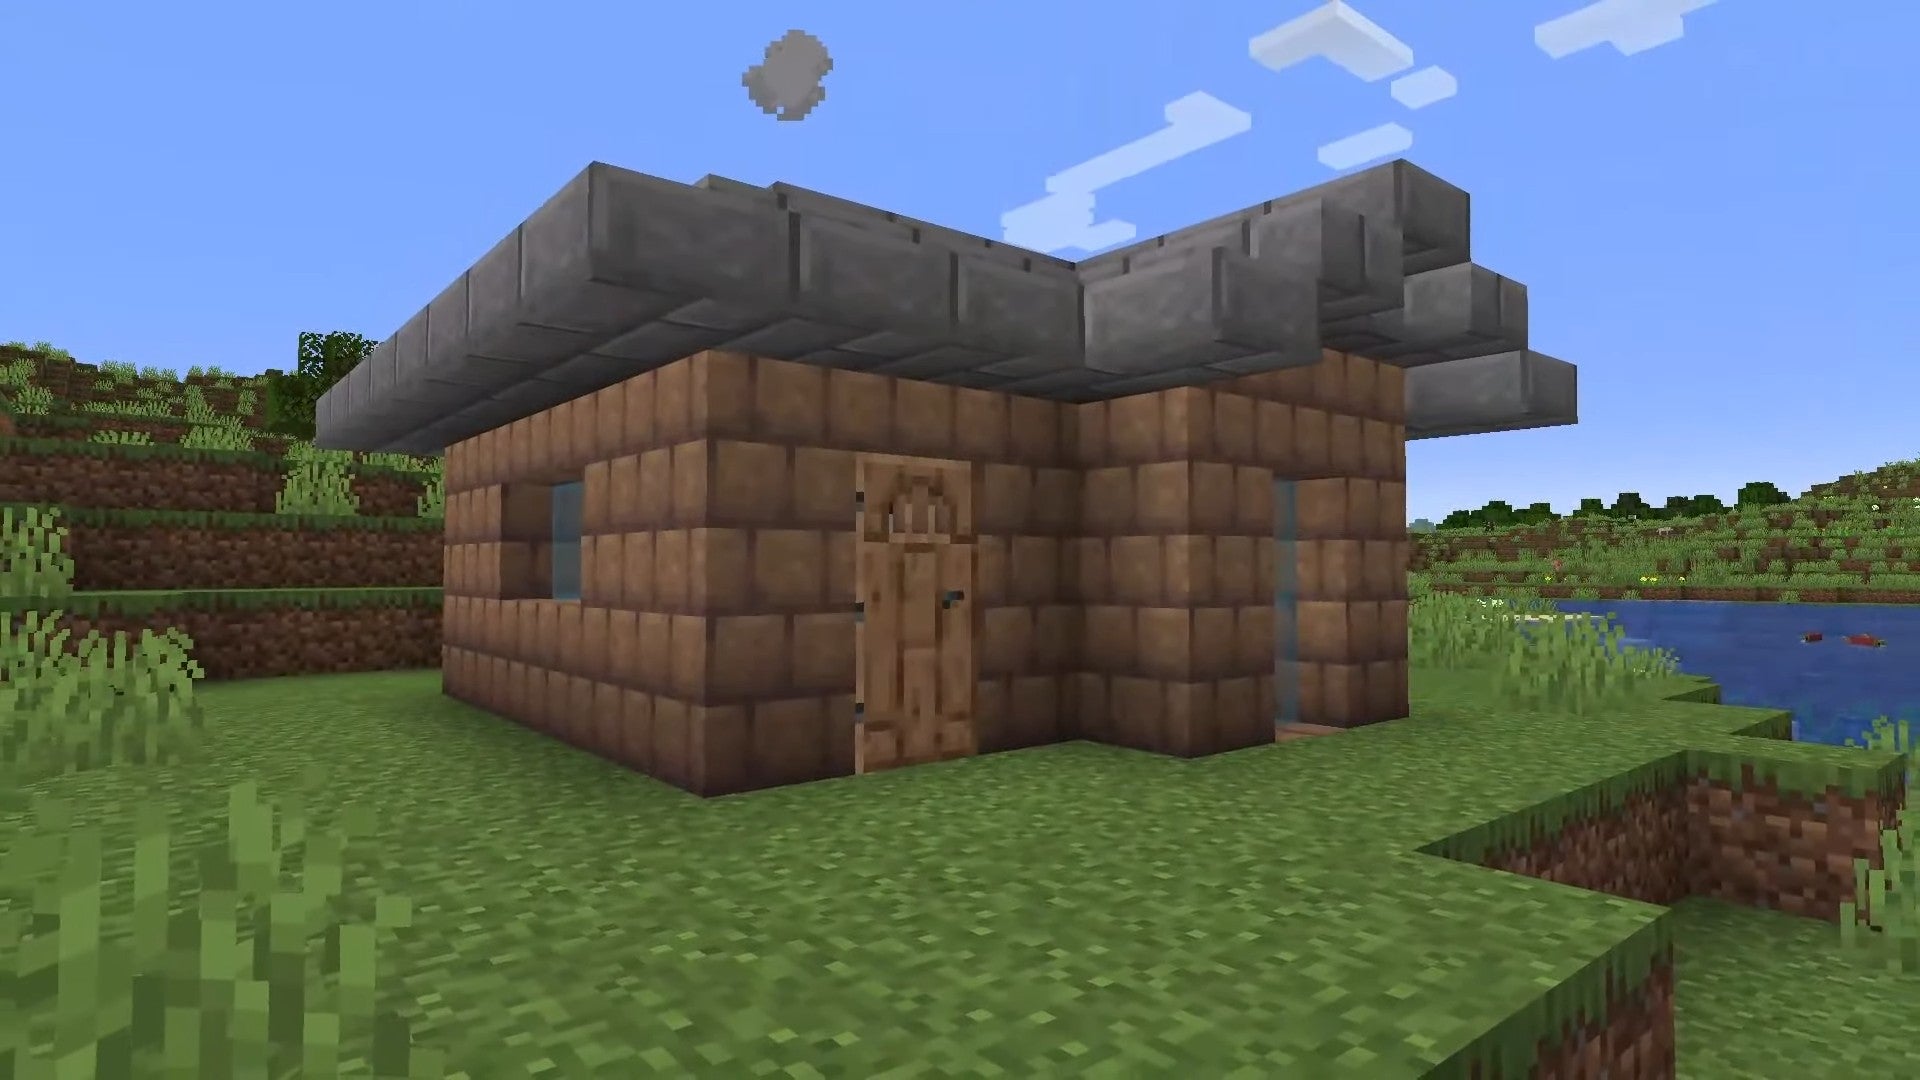 House made of mud bricks in Minecraft